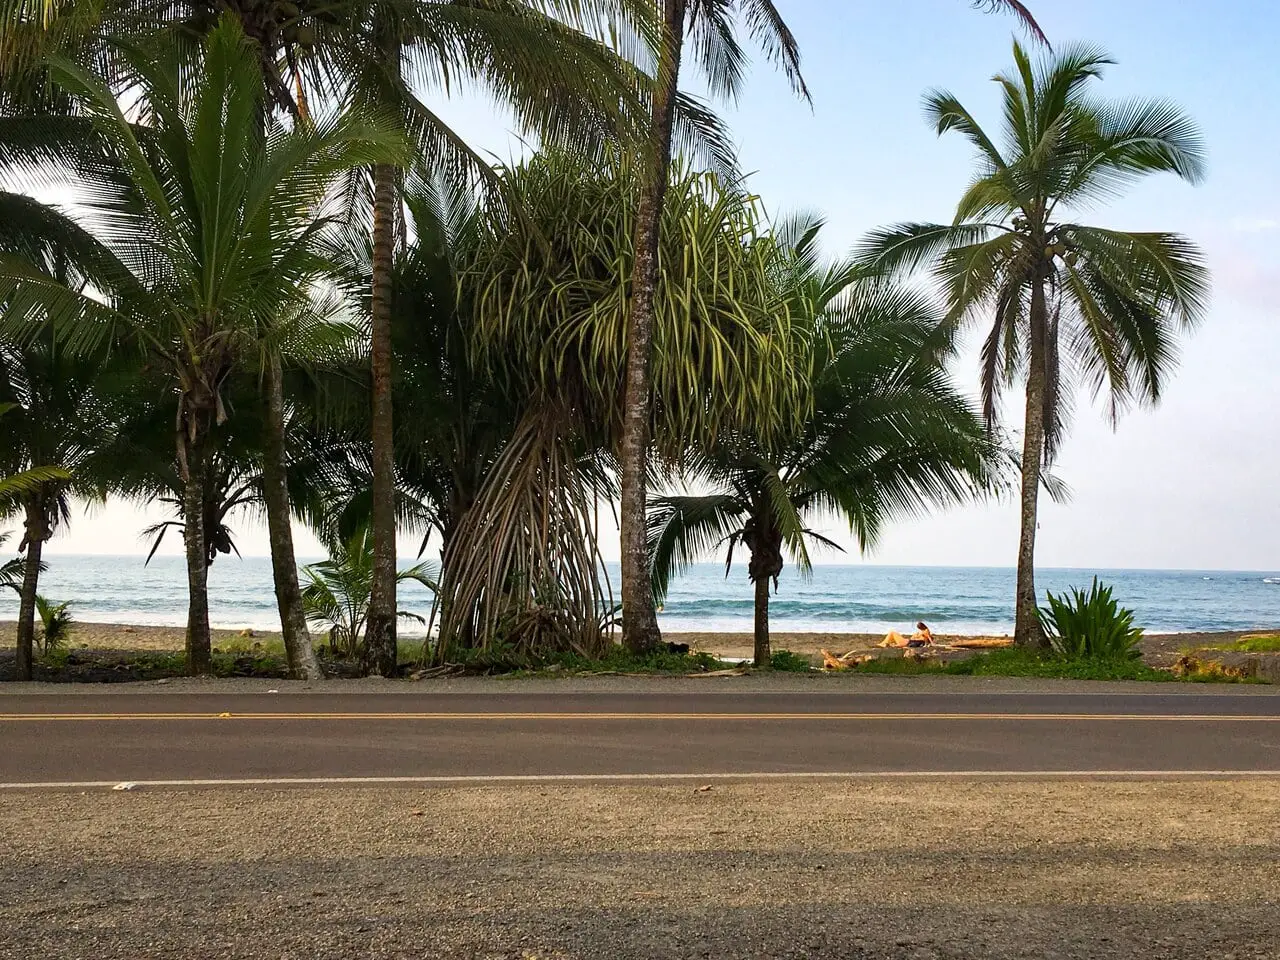 Palm trees at Puerto Viejo de Talamanca